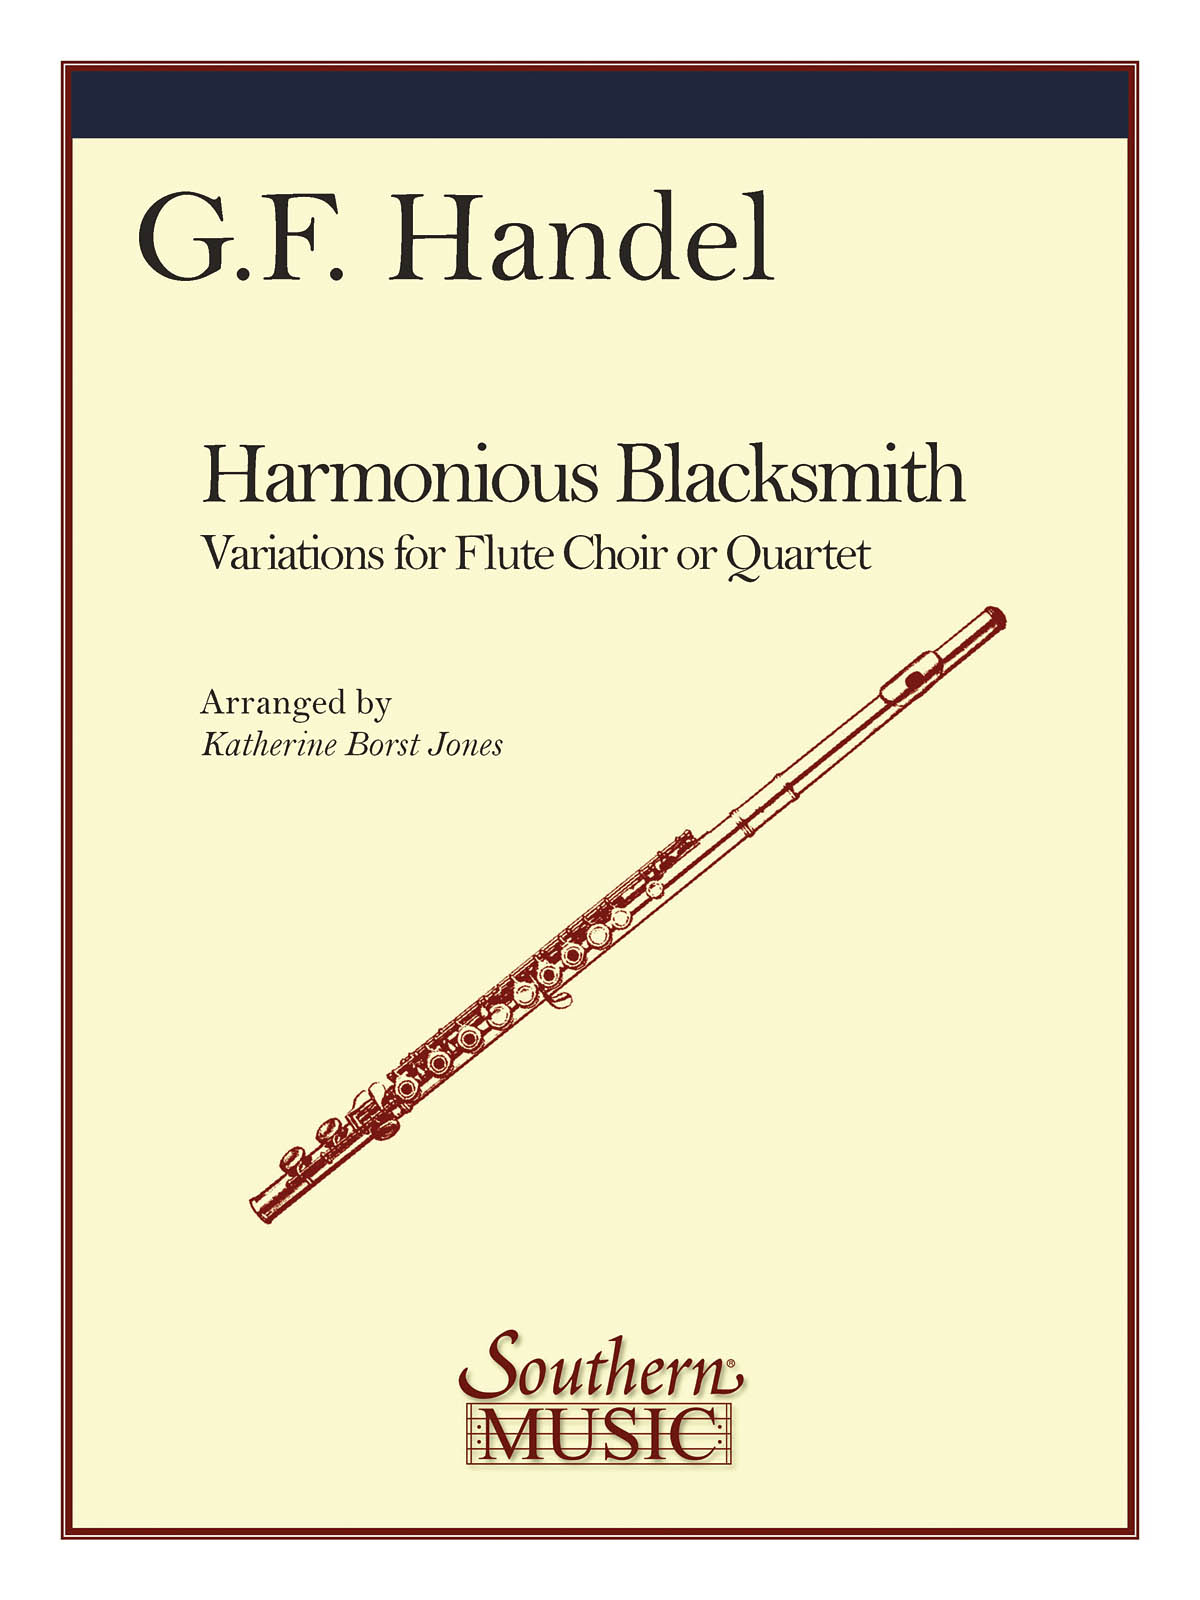 Georg Friedrich Hndel: The Harmonious Blacksmith: Flute Ensemble: Score